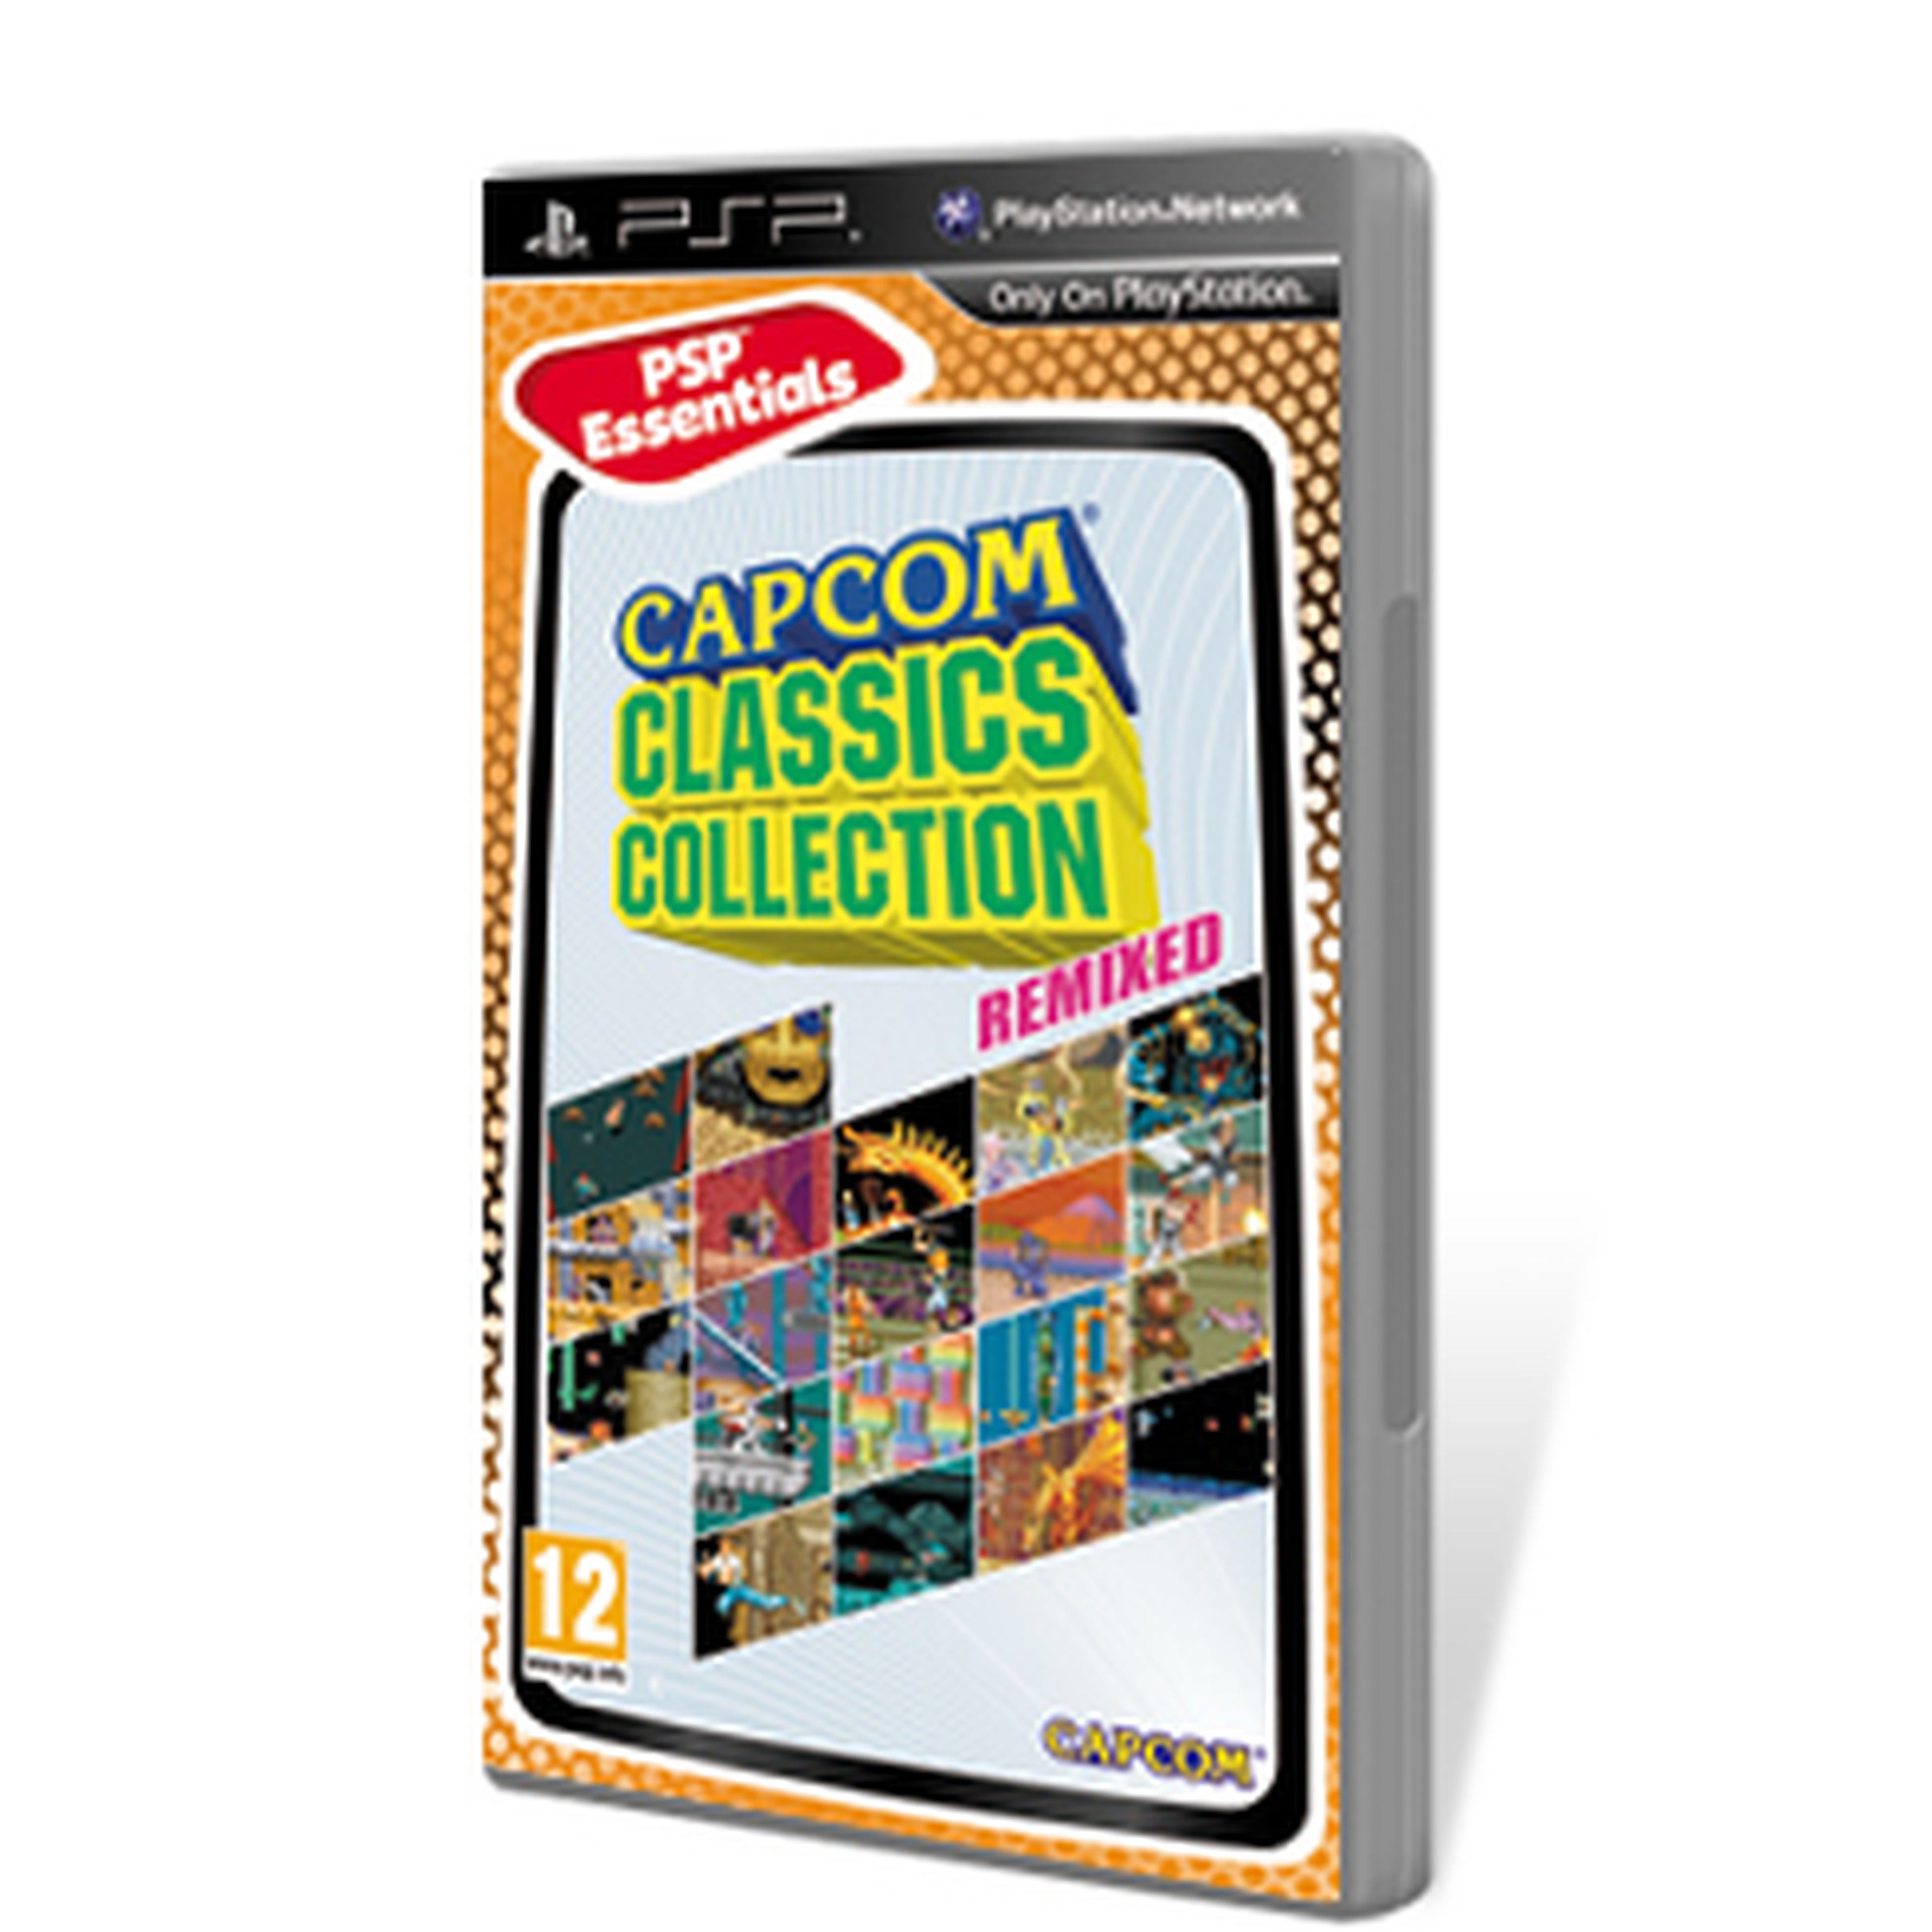 Capcom Classic Collection Remixed para PSP